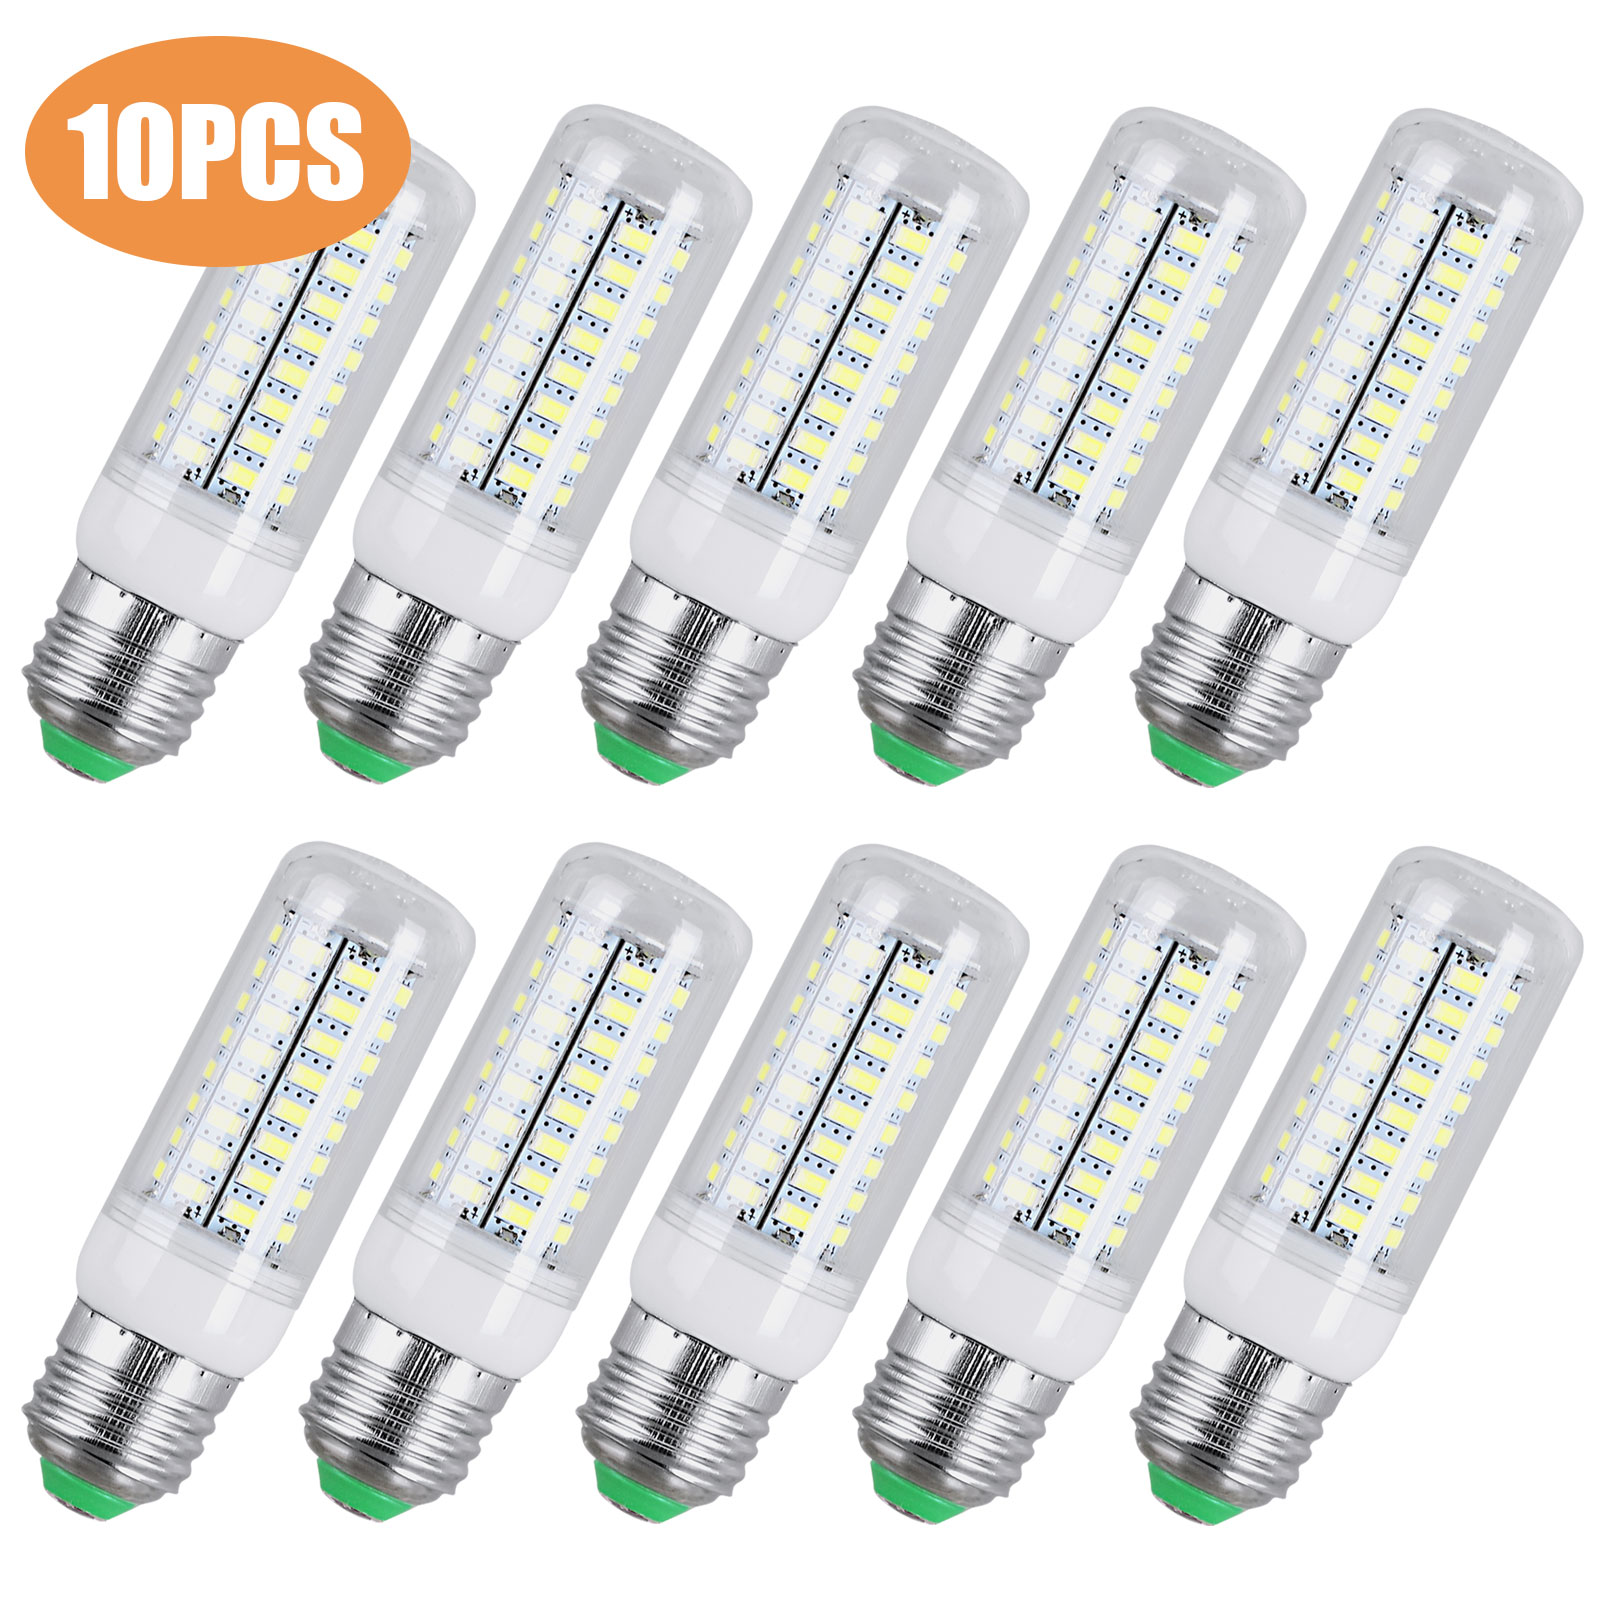 4 Pack Energy Saving E27 Warm White LED Corn Bulb Lamp Light 110V AC US Shipping 